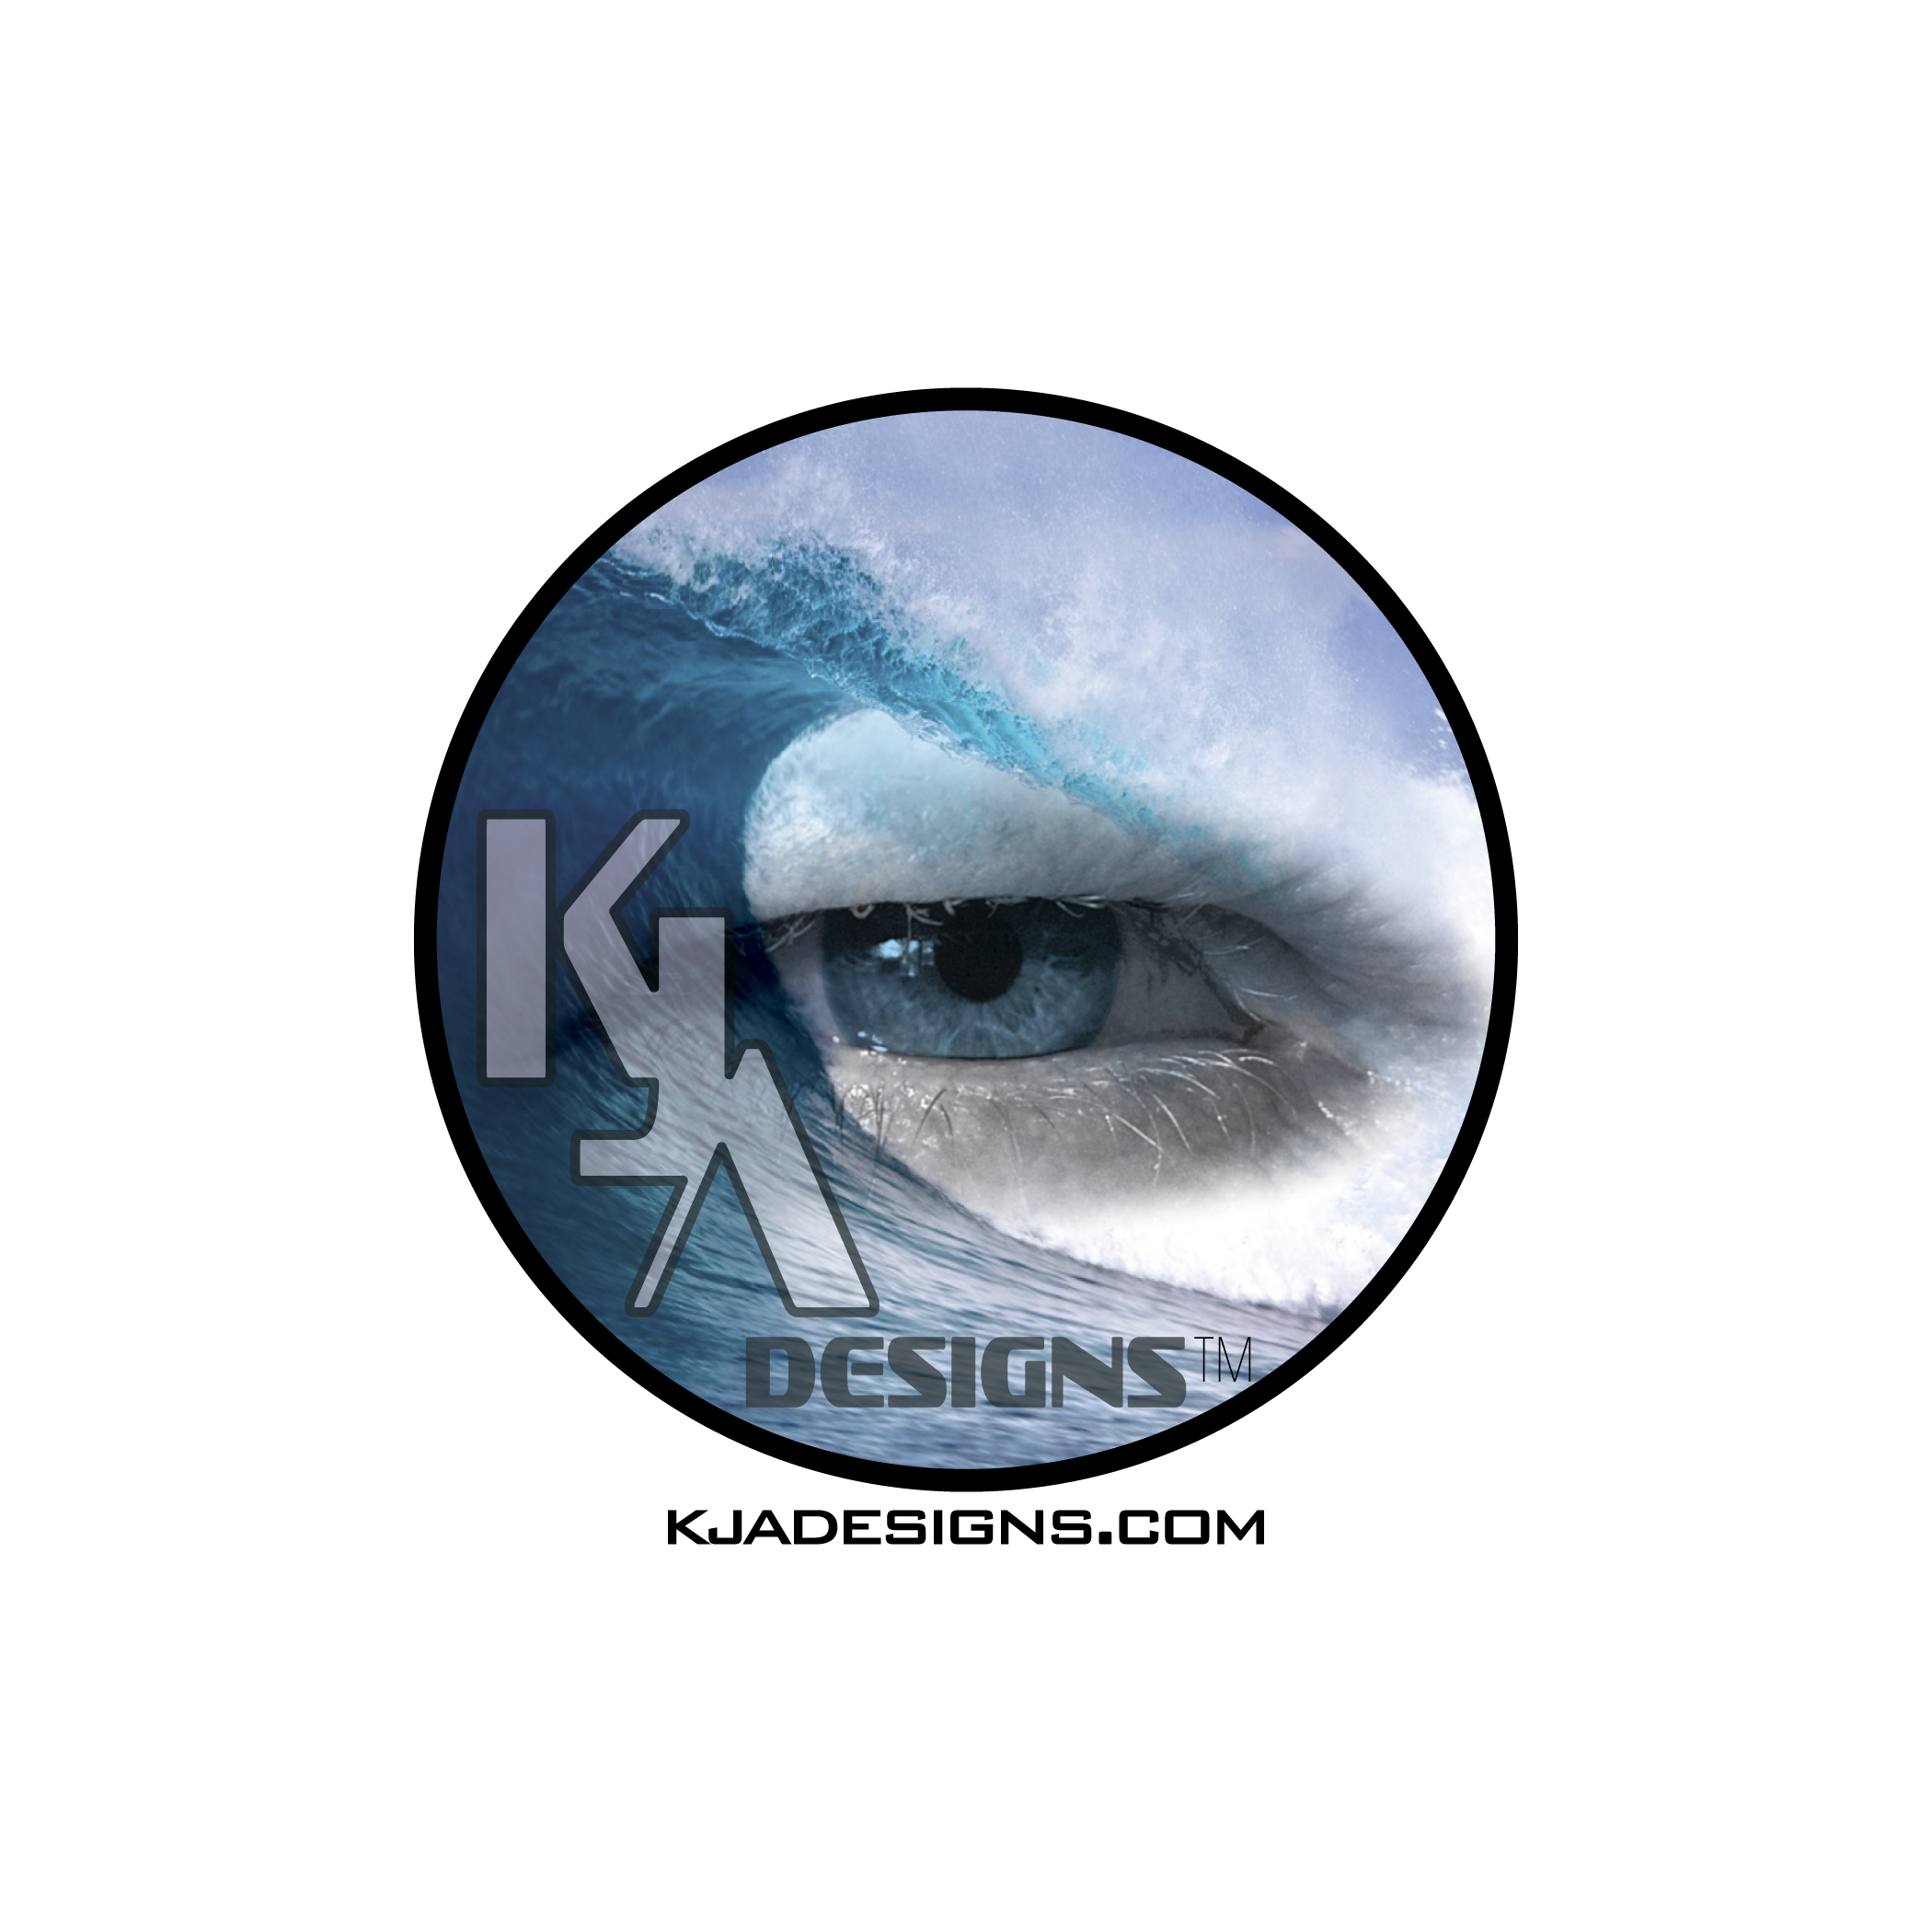 KJA Designs Inc.™ eye 2A